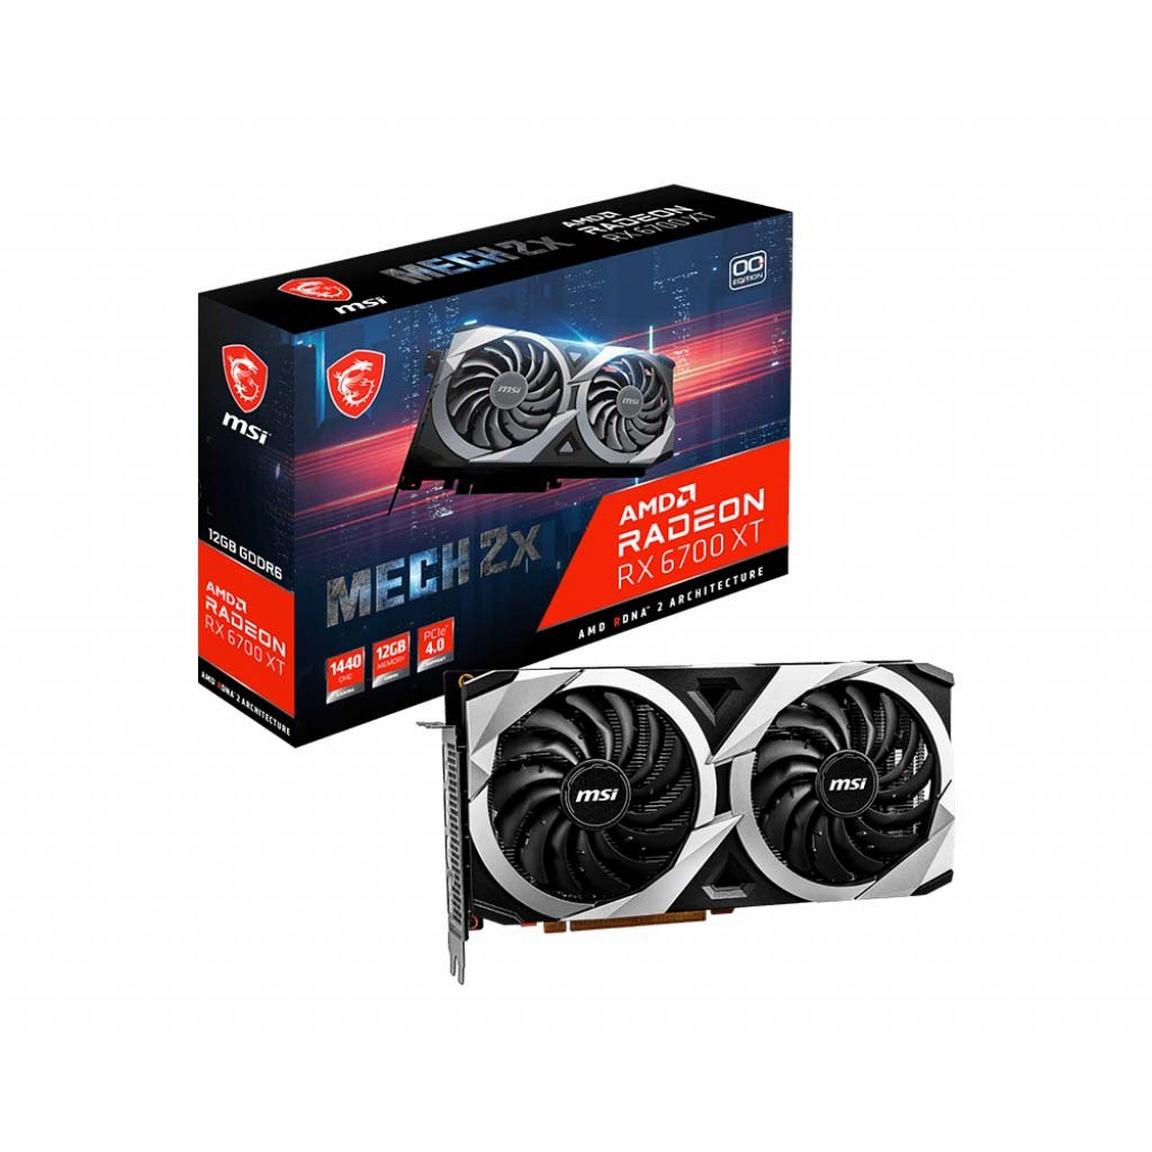 MSI AMD Radeon RX 6700 XT MECH 2X 12G OC Graphics Card $484